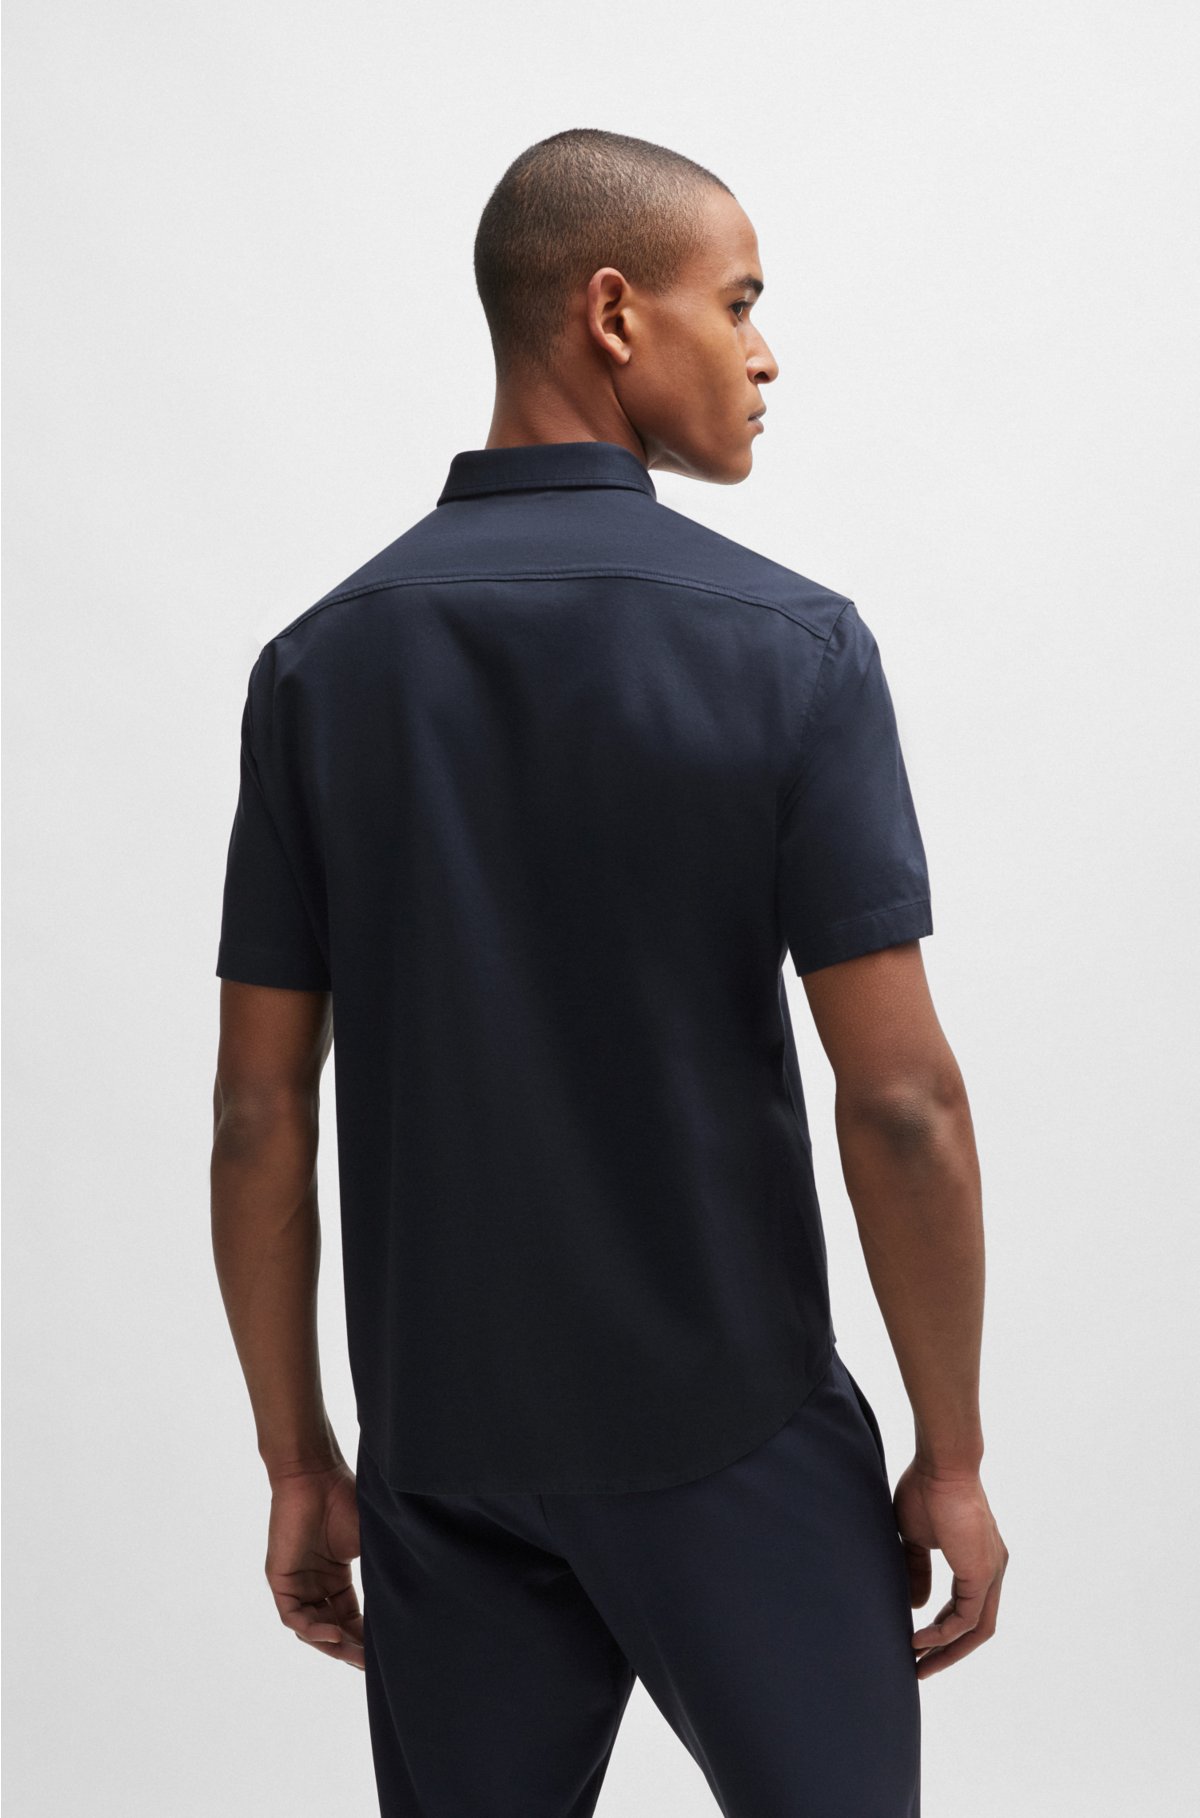 Regular-fit shirt in cotton piqué jersey, Dark Blue